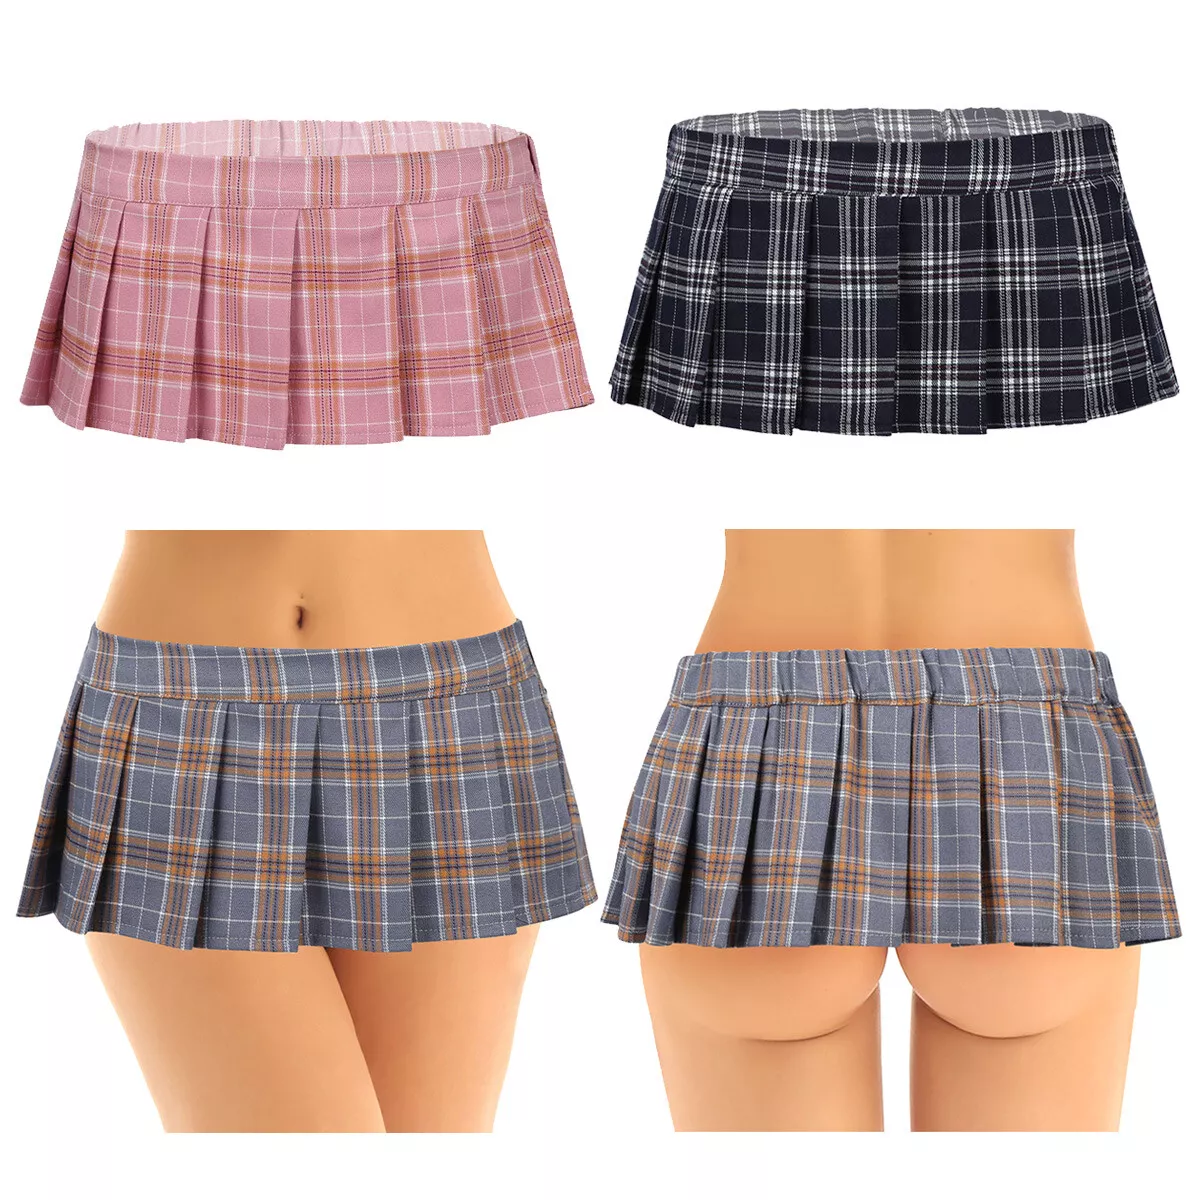 High School Girls In Short Skirts Bending Over latina xxl